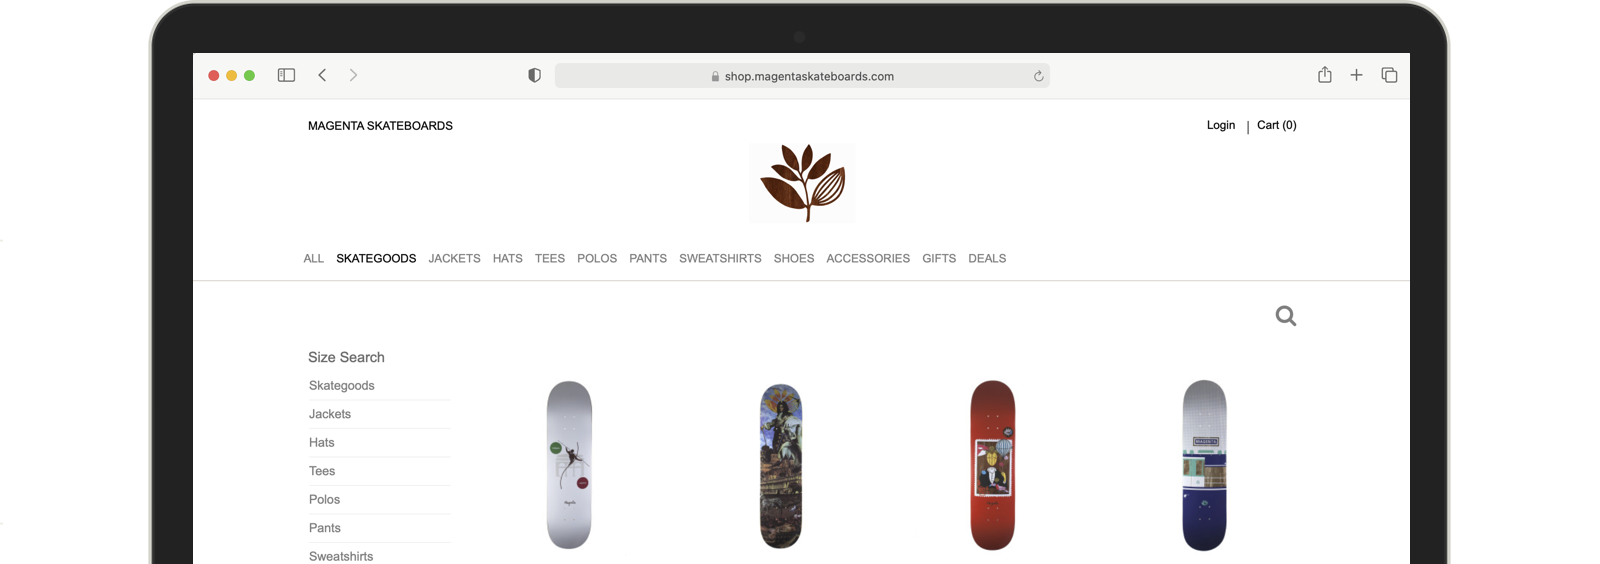 Main developer for the Magenta Skateboards website and B2B admin system